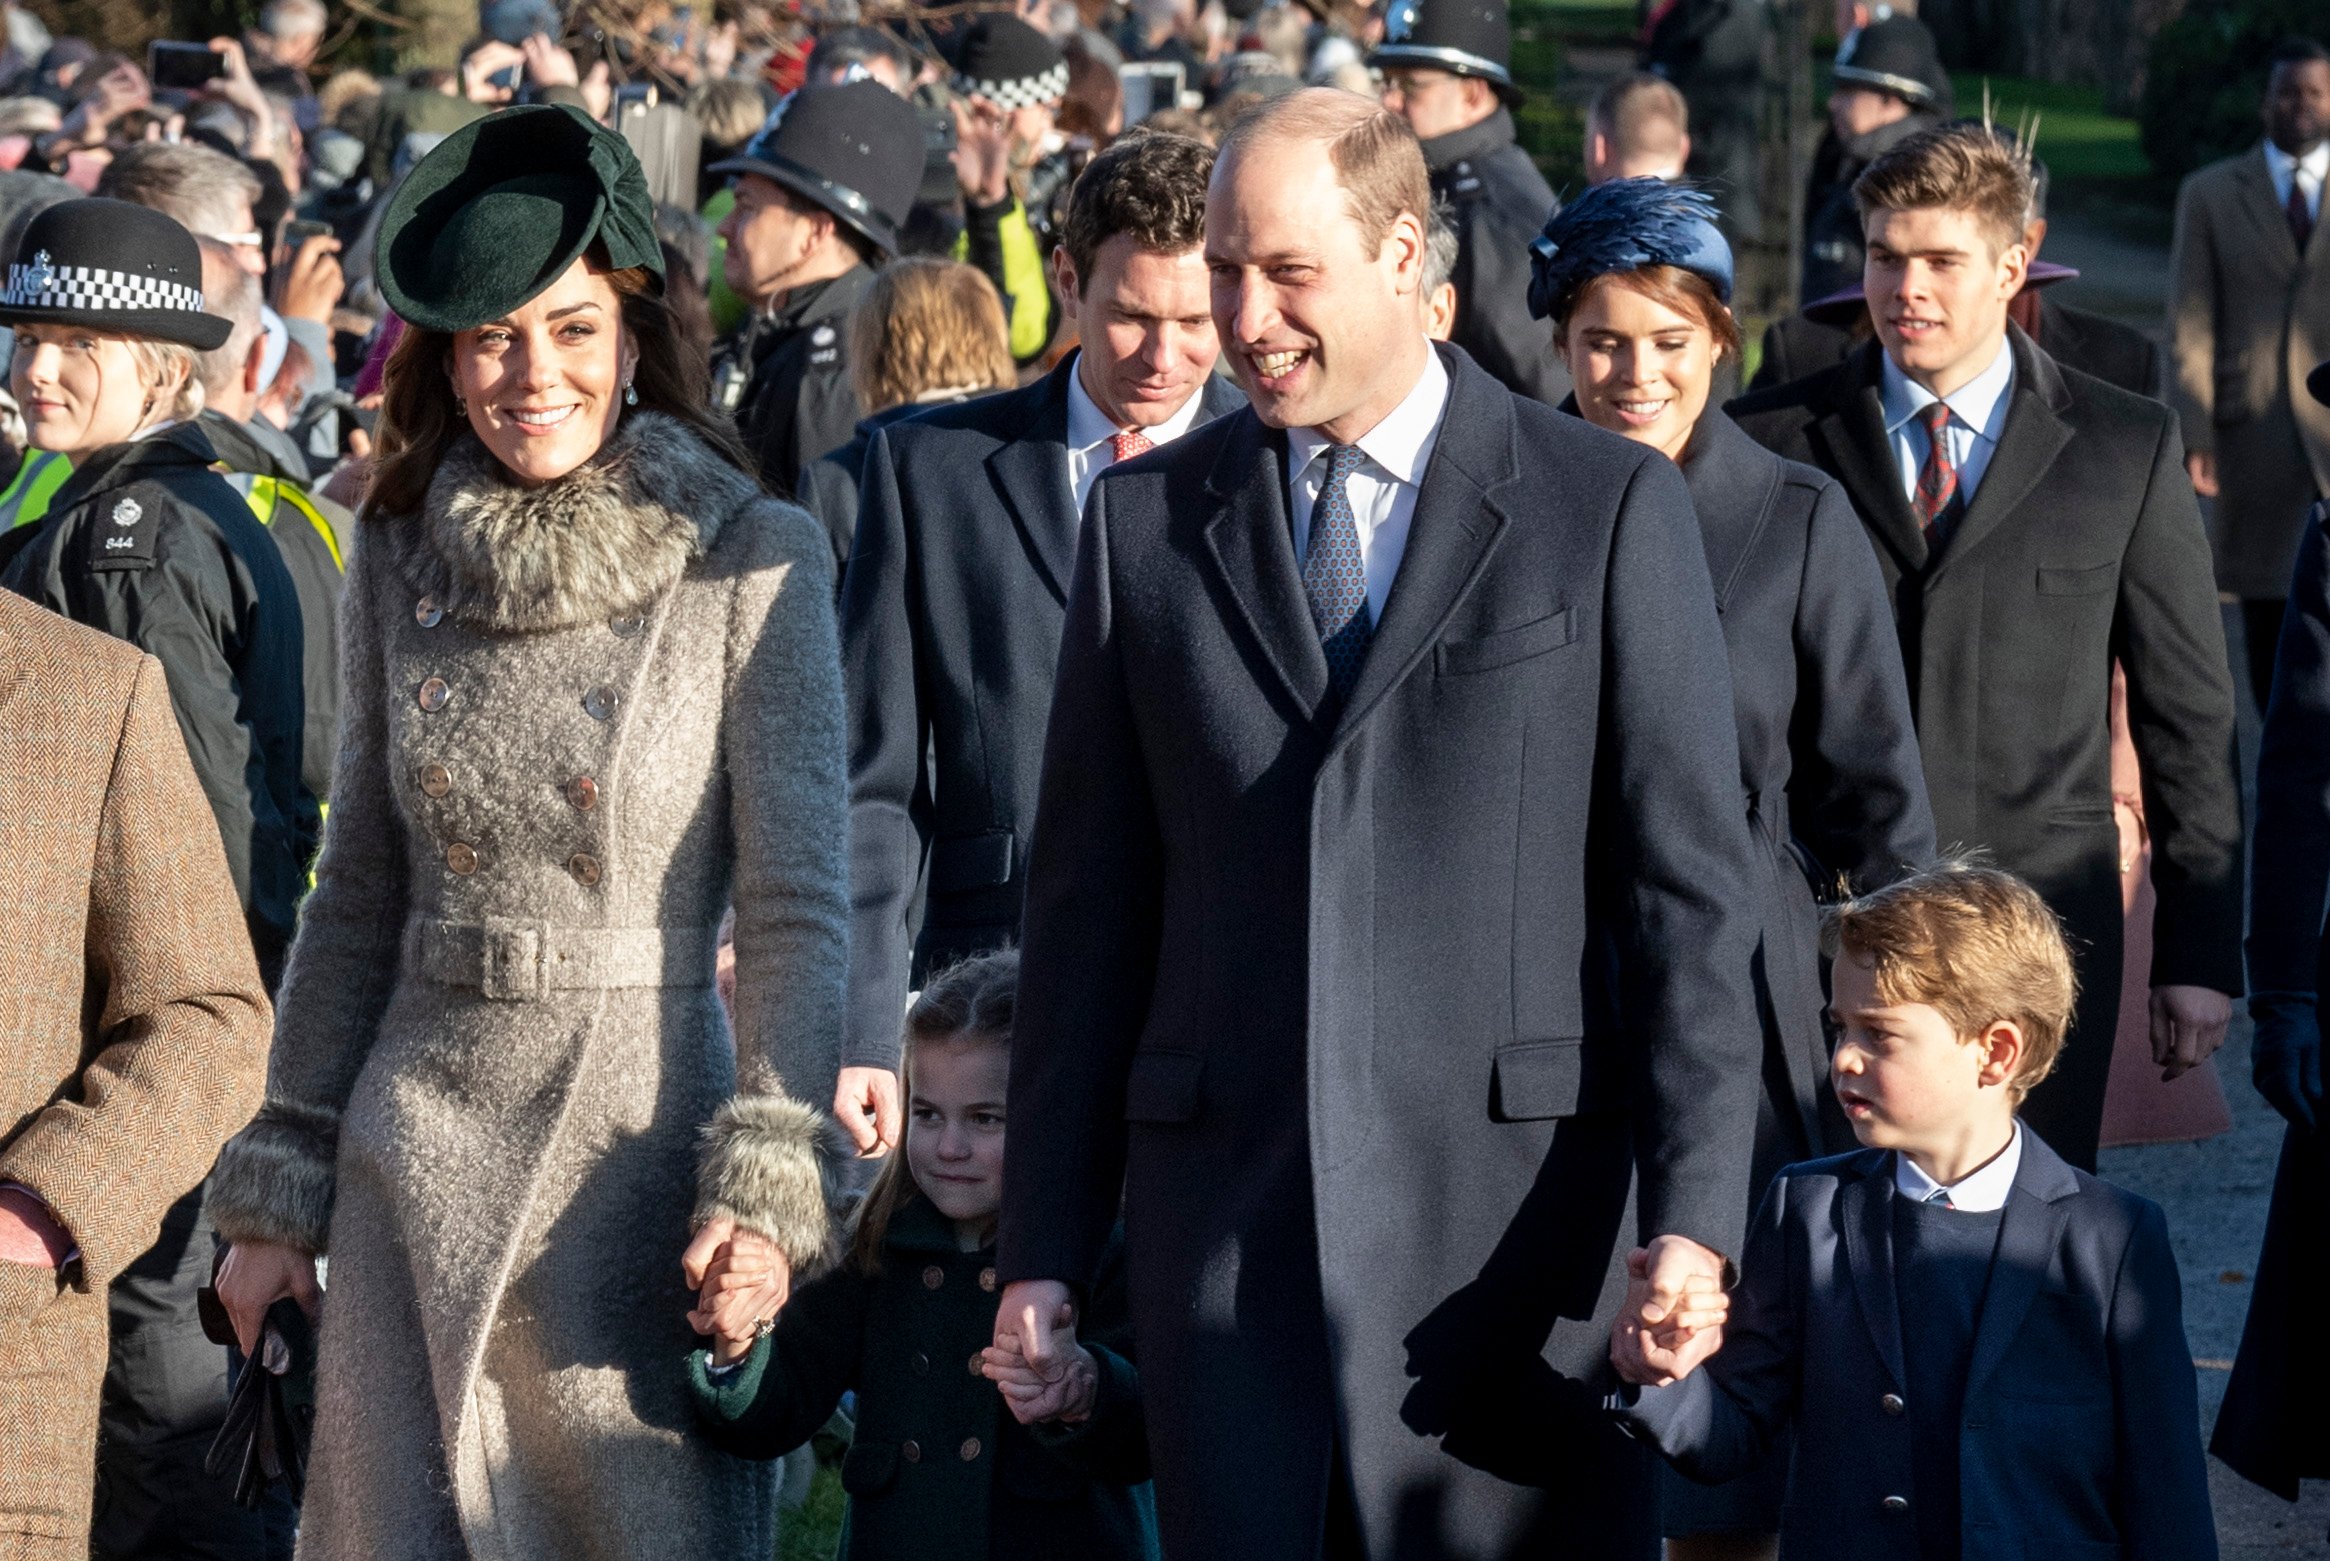 Kate Middleton, Prince William, Prince George, and Princess Charlotte making annual Christmas walk at Sandringham